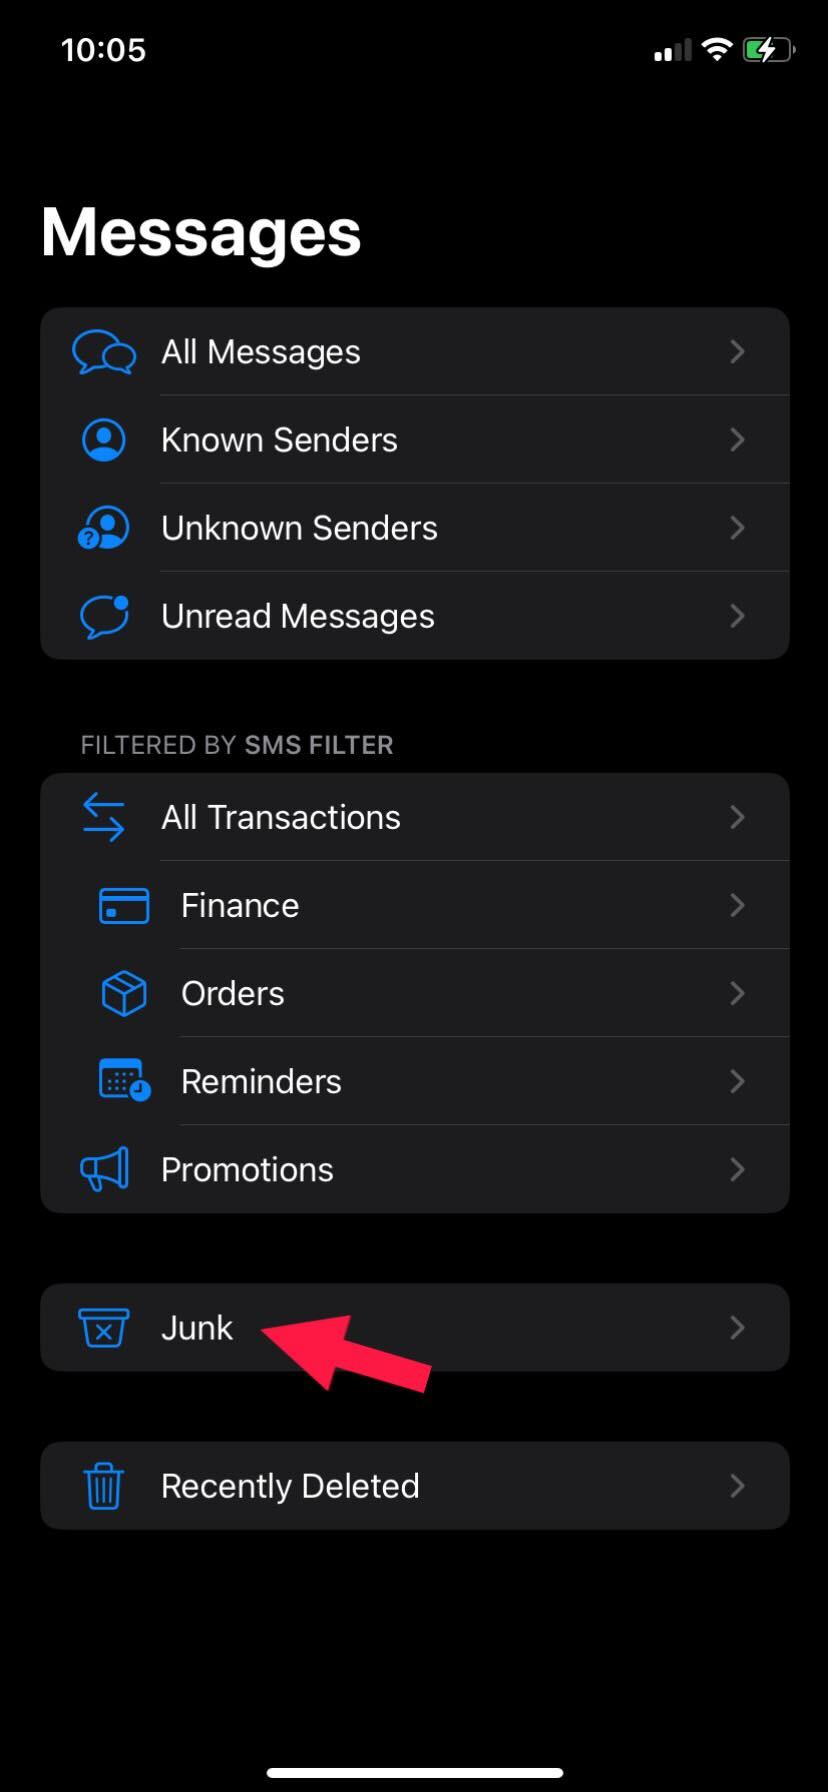 iPhone Messages Junk option